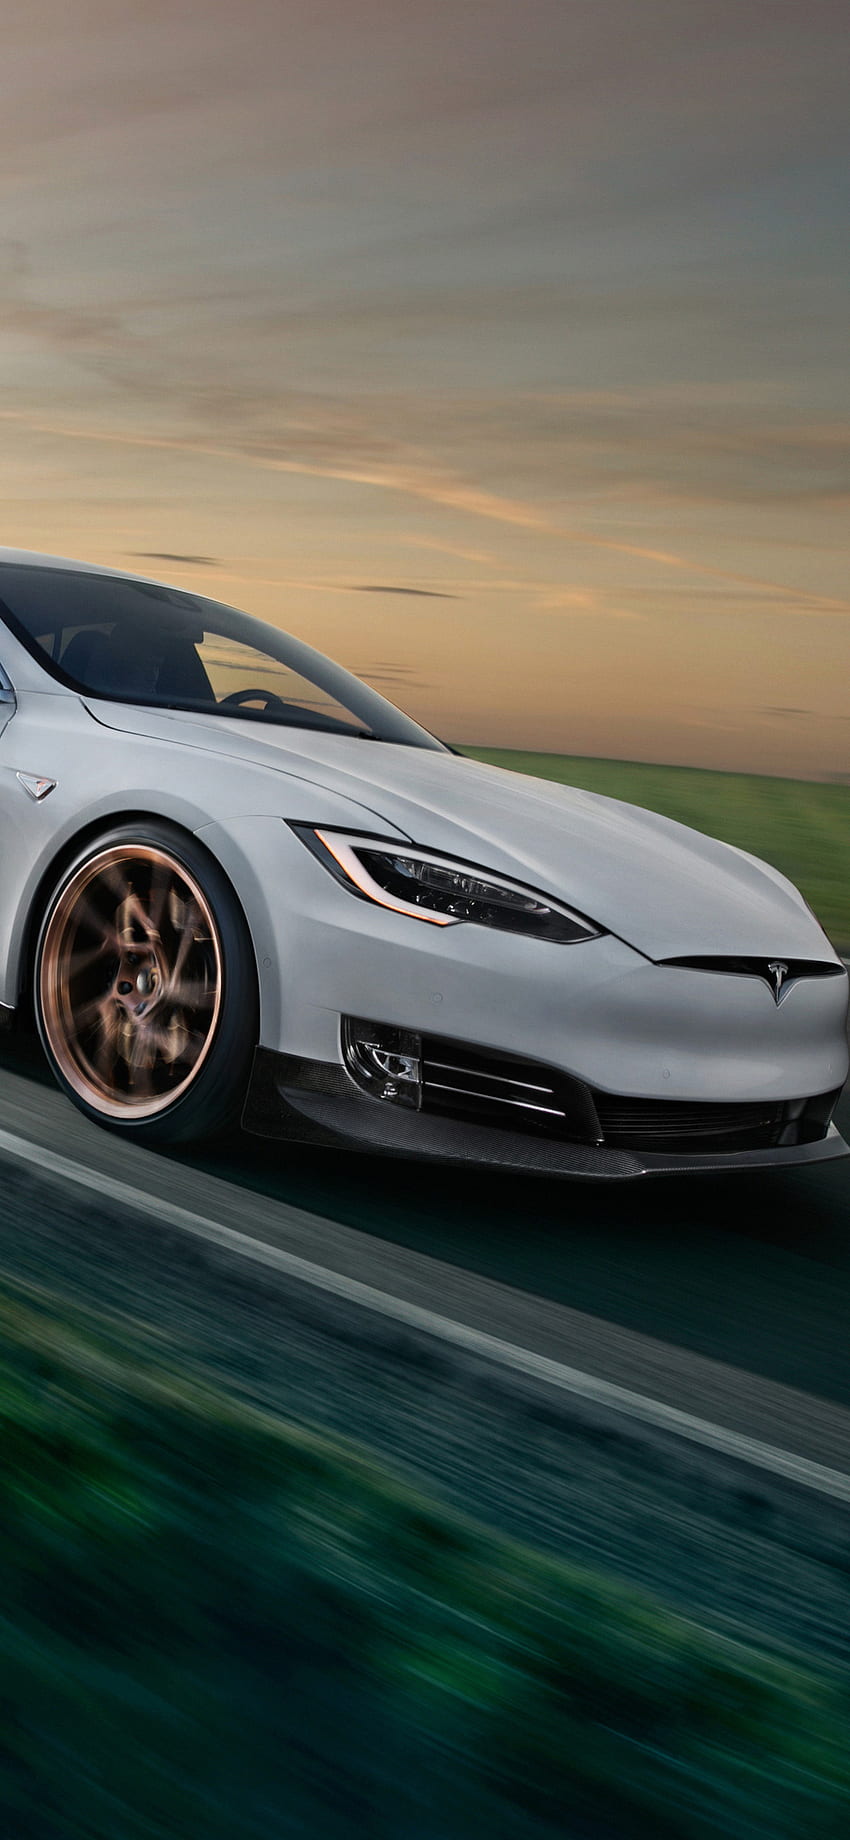 Tesla Photos, Download The BEST Free Tesla Stock Photos & HD Images